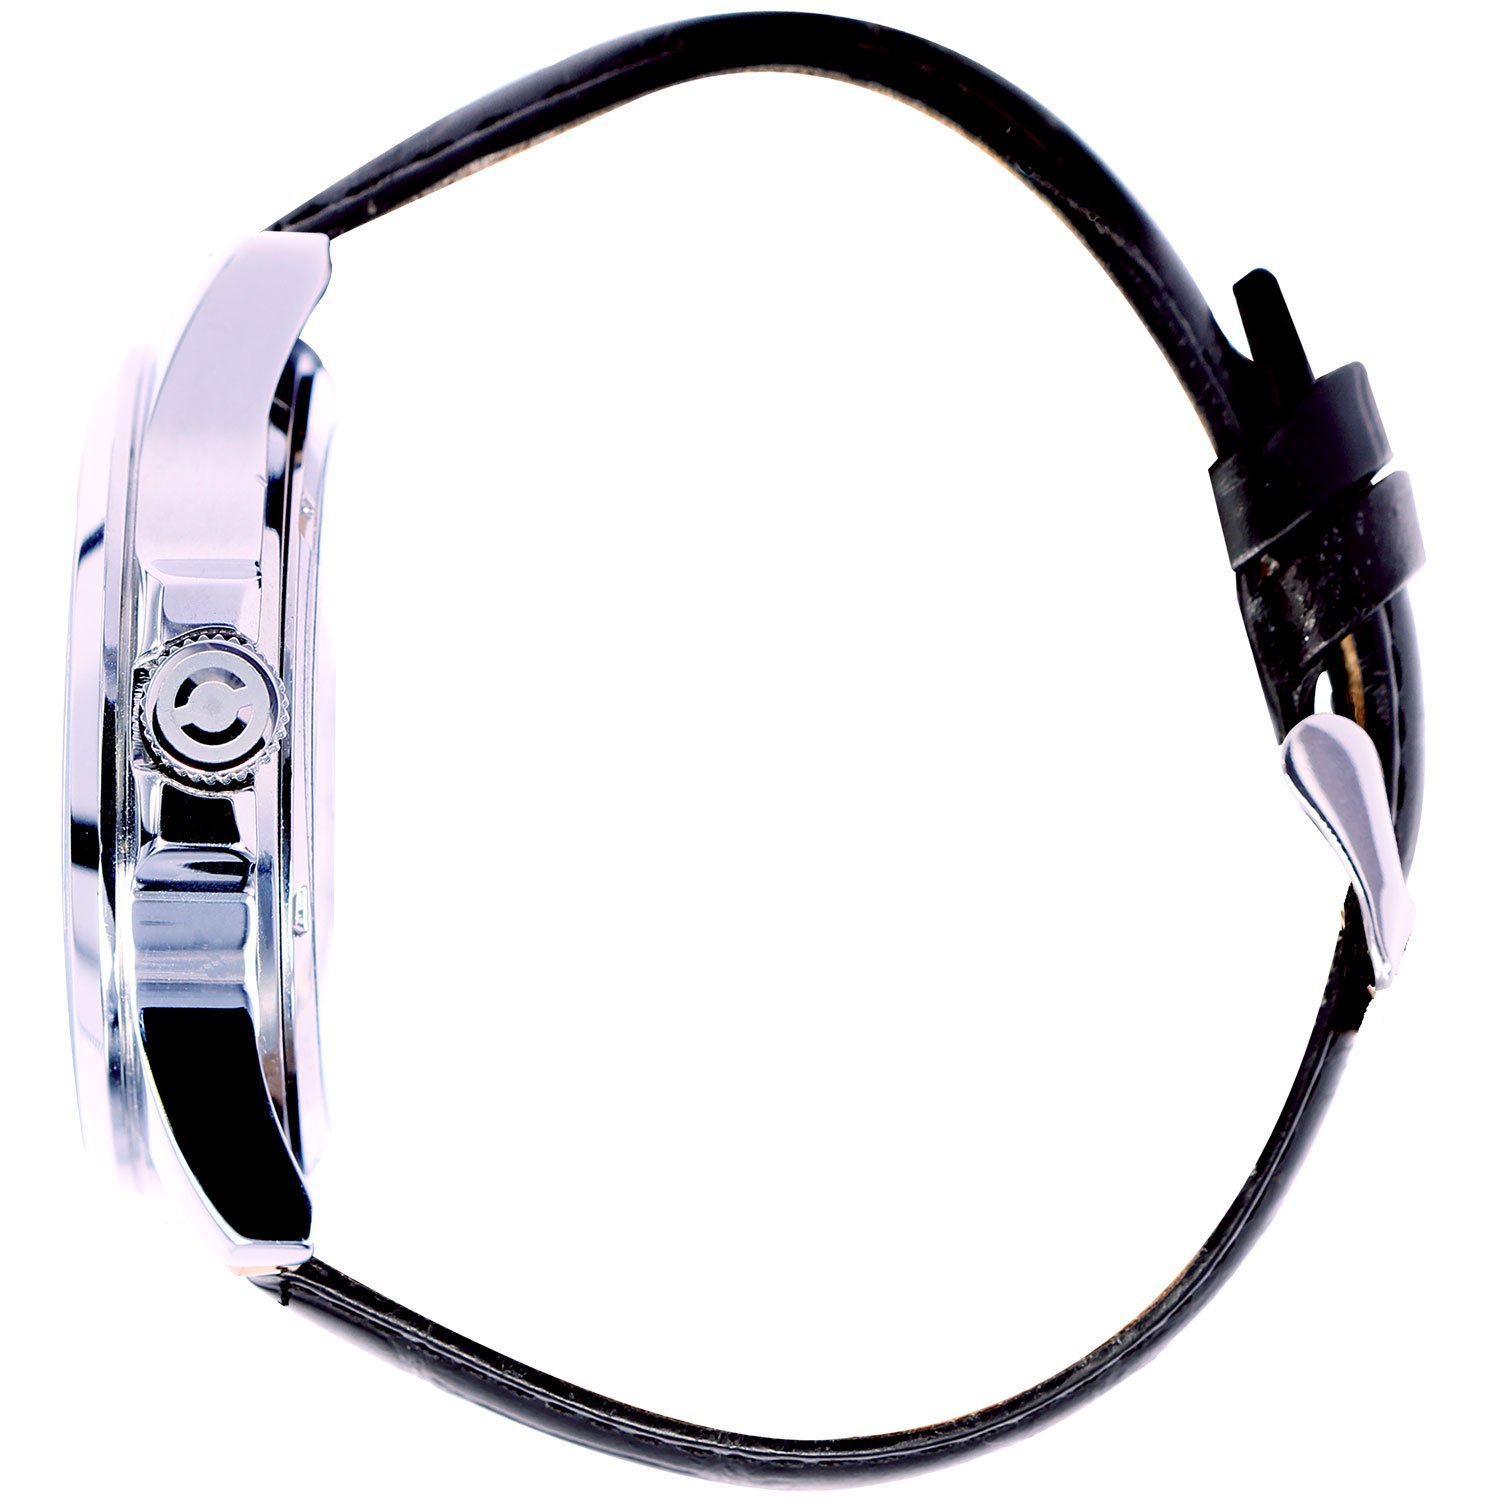 PICONO Mr.&Mrs. Pearl Series - Multi Dial Water Resistant Analog Quartz Watch - No. 4404 (Silver)